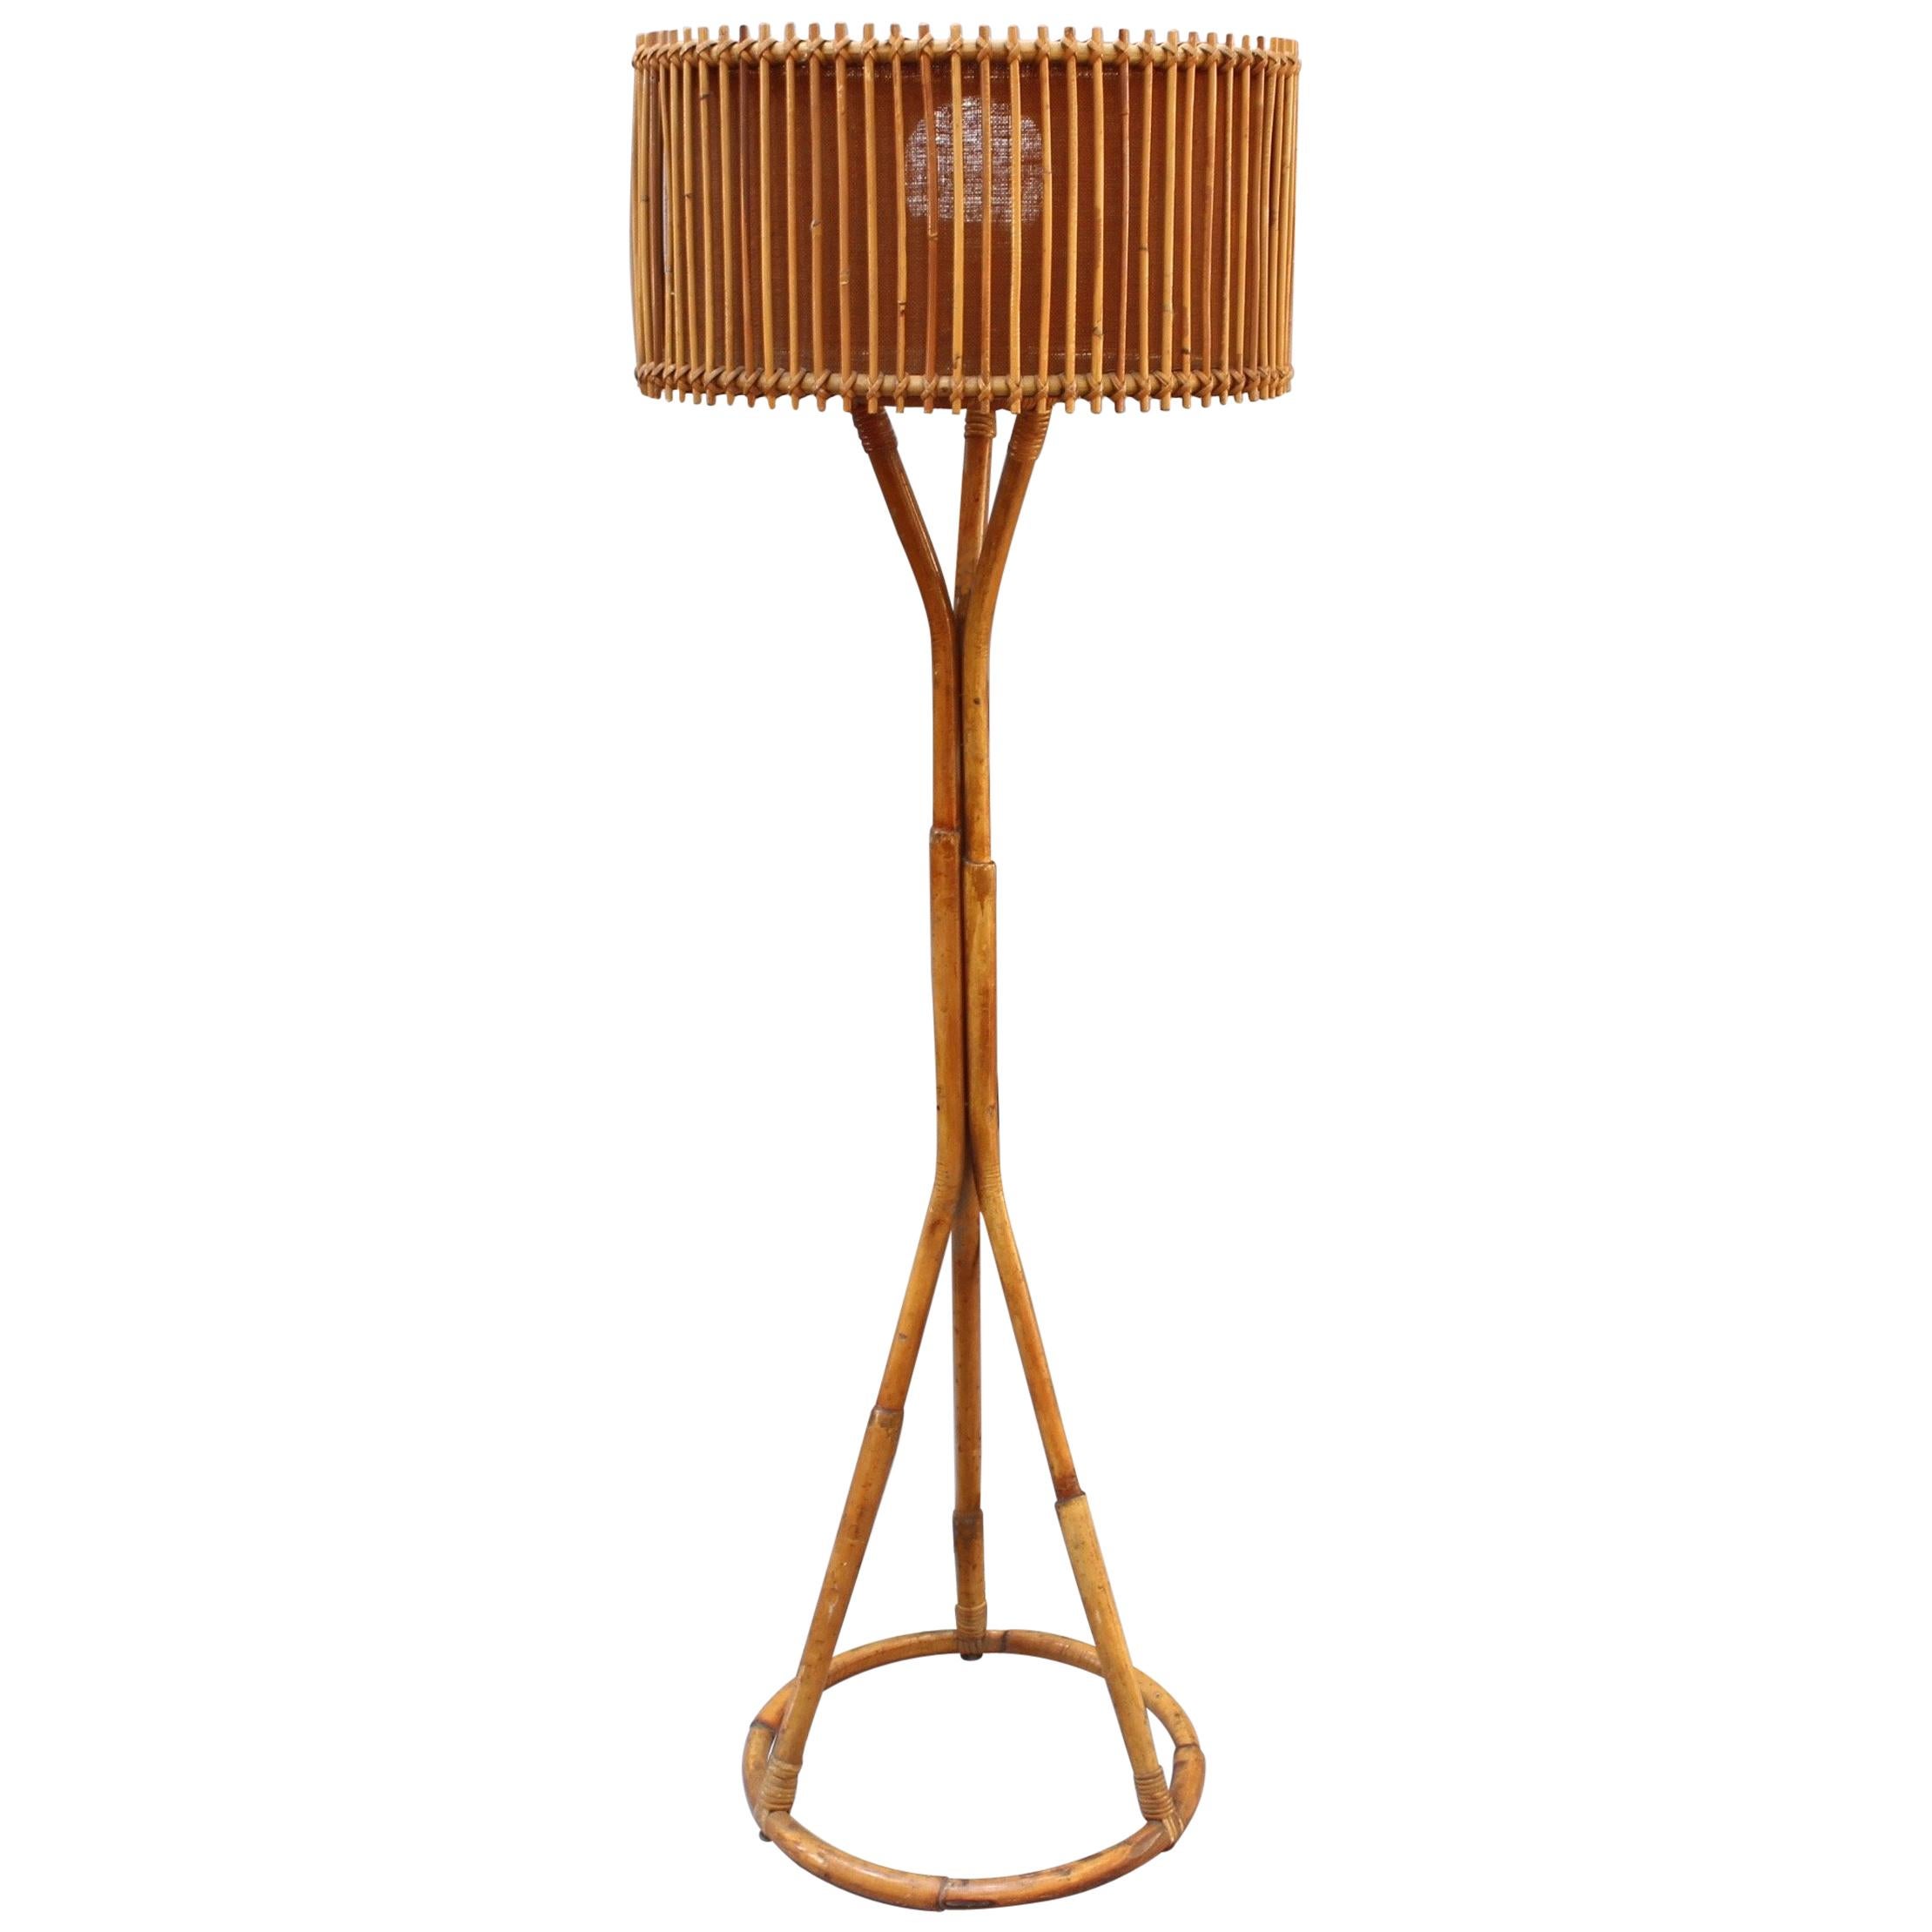 Italian Rattan and Bamboo Floor Lamp, circa 1960s